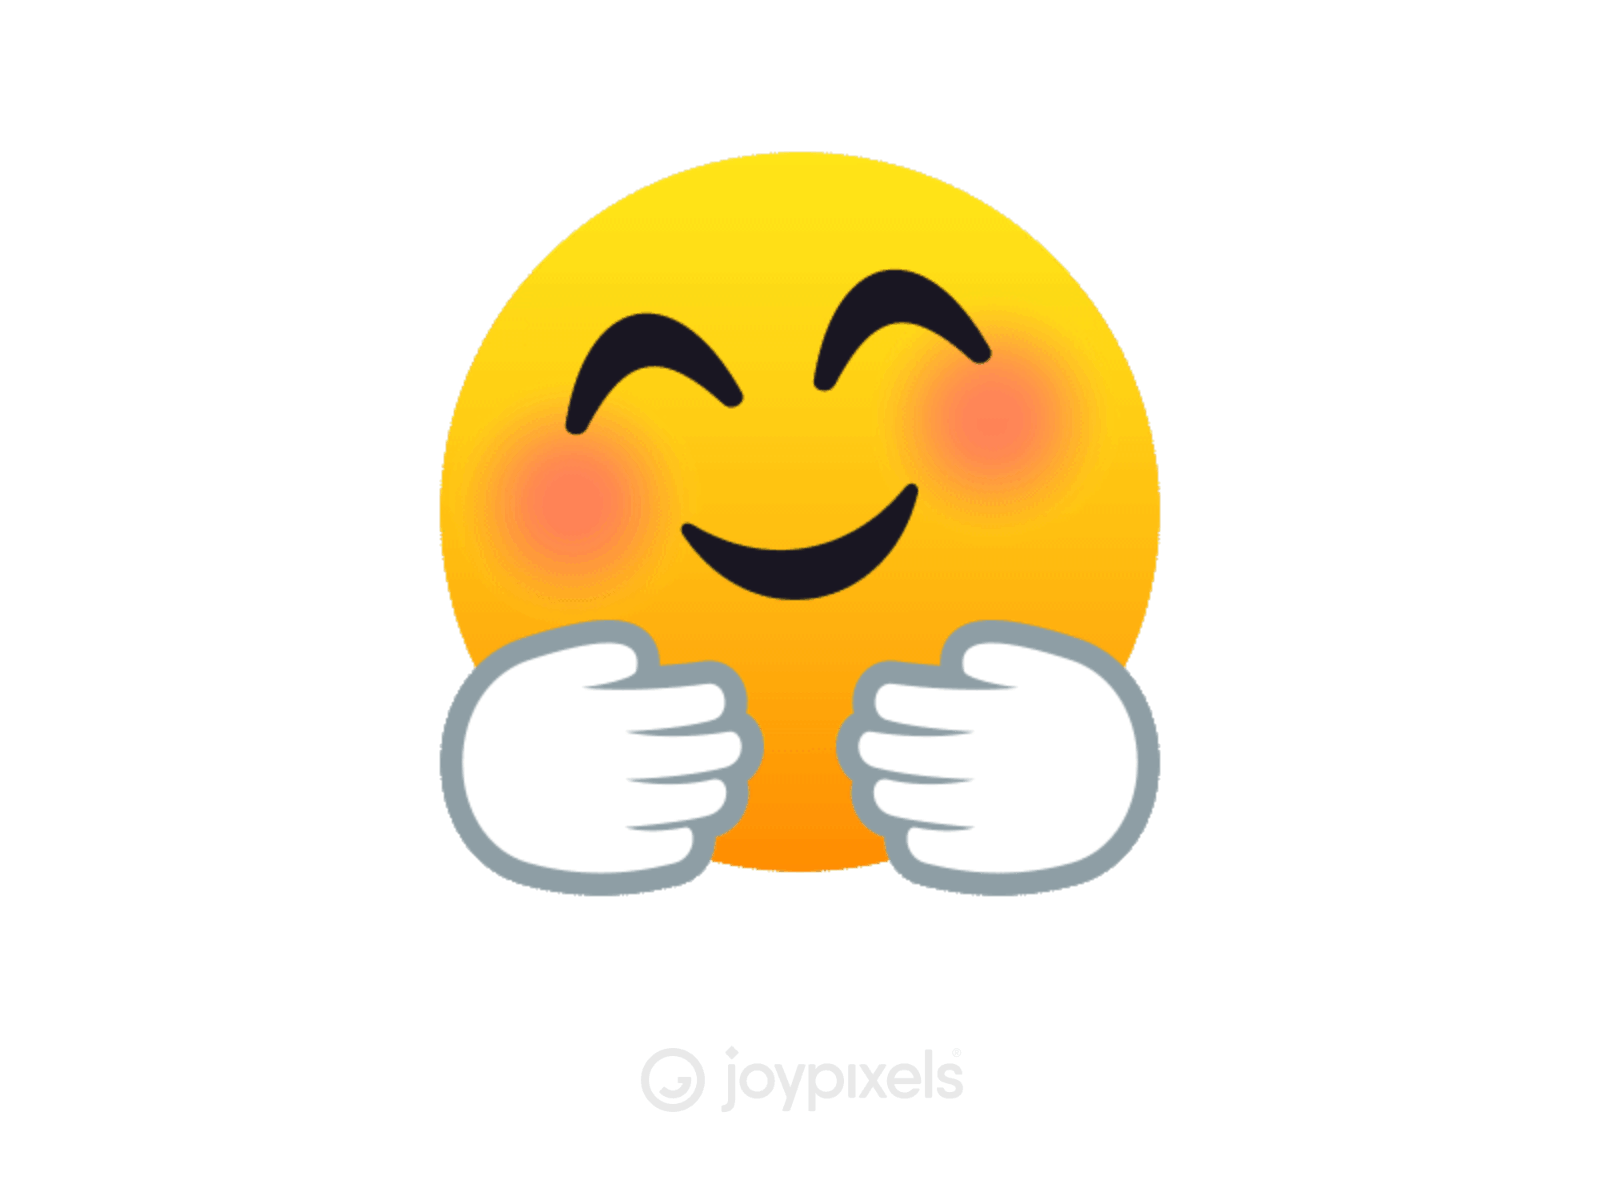 The JoyPixels Hugging Face Emoji Animation by JoyPixels on Dribbble